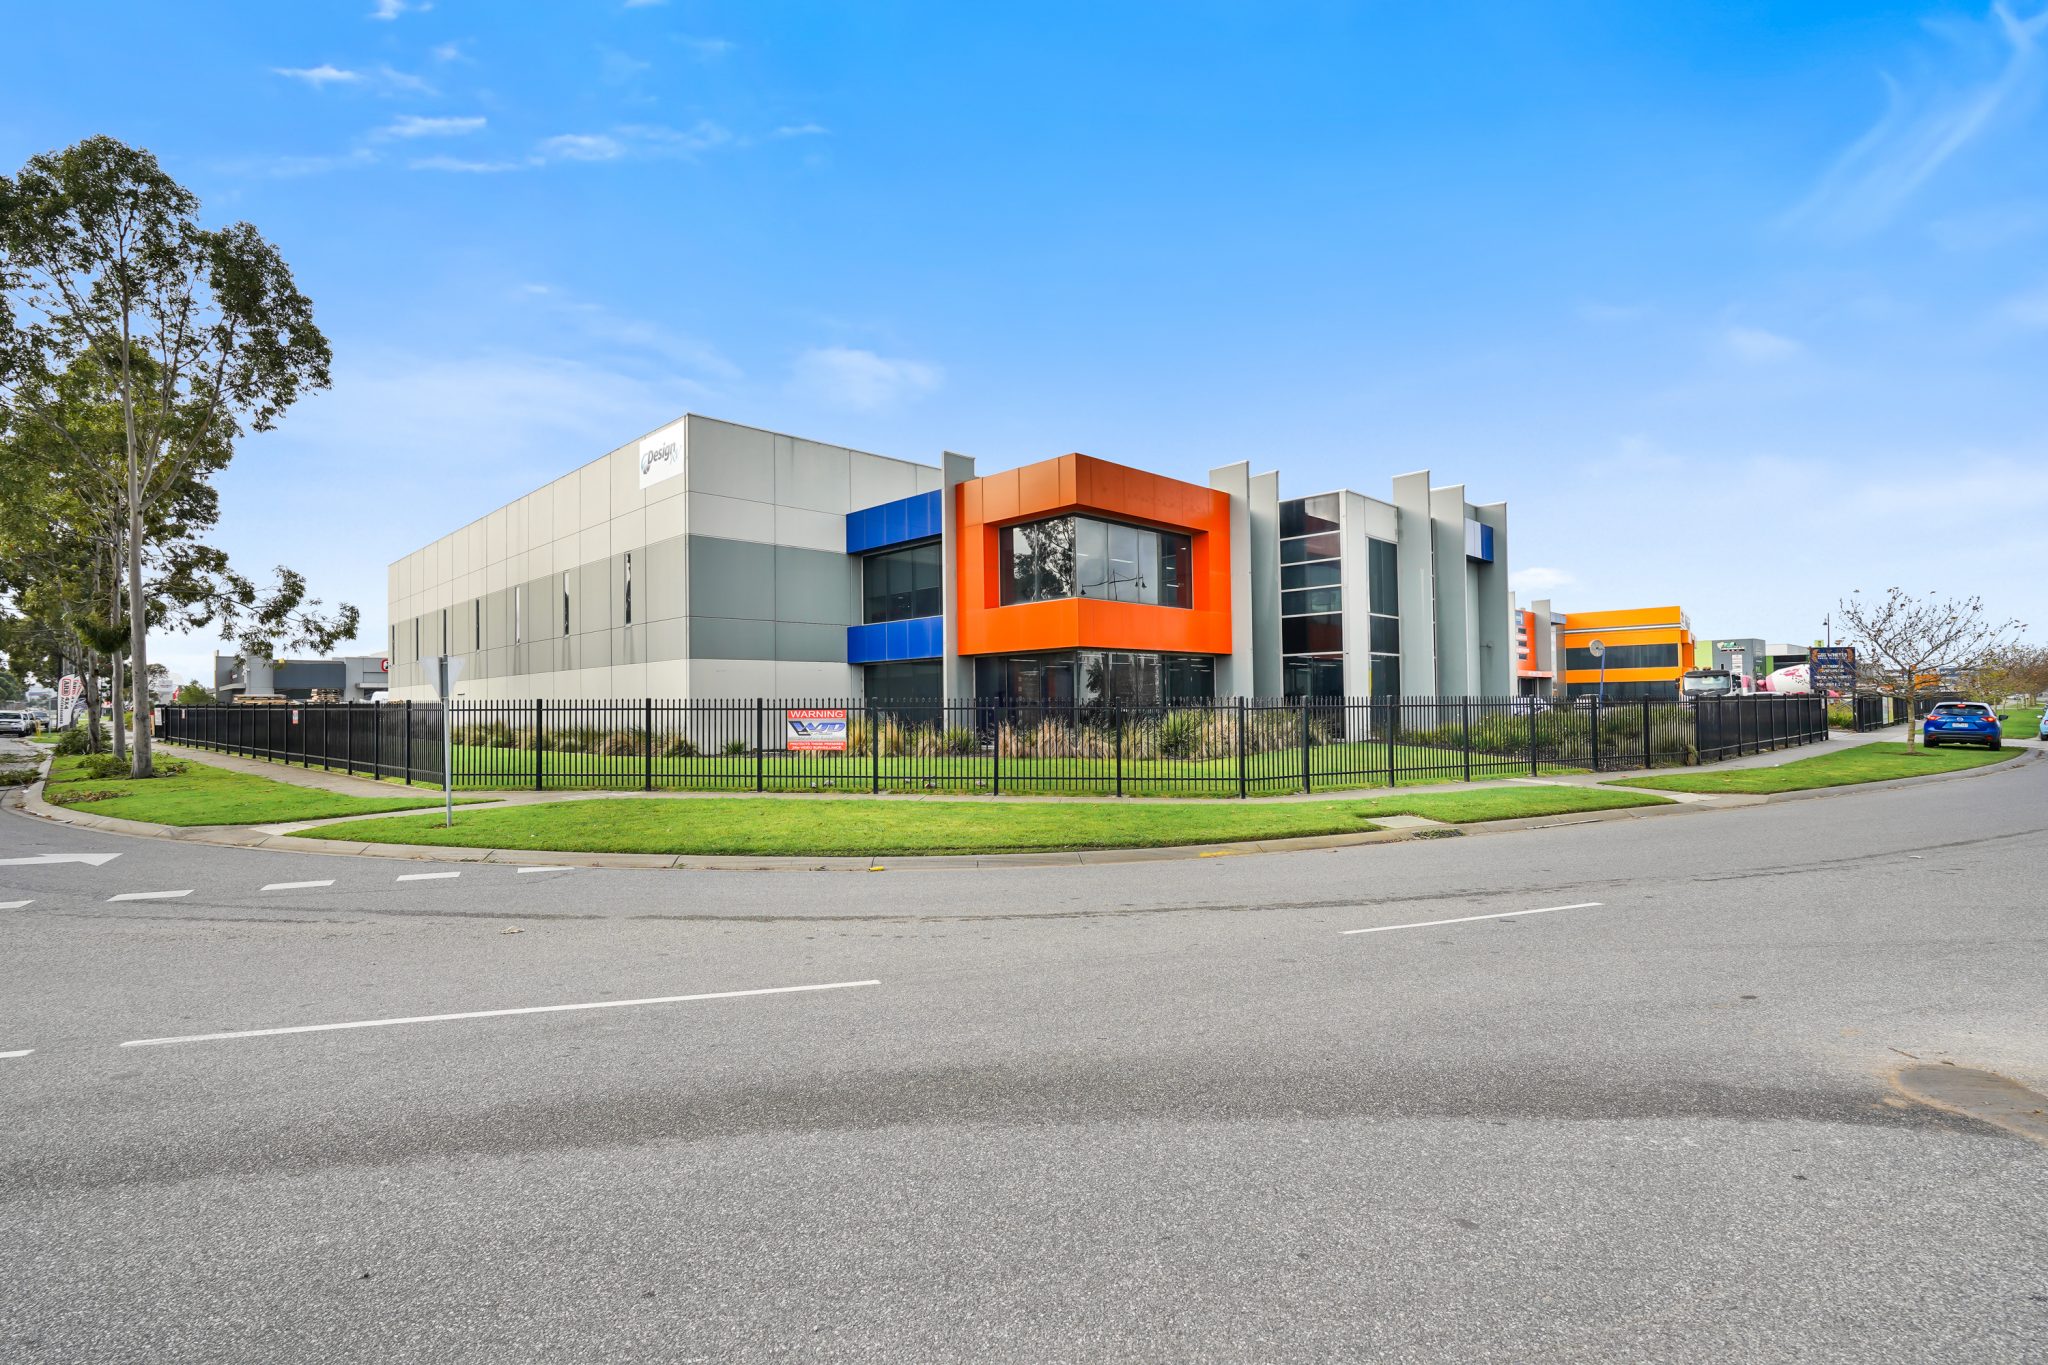 Commercial real estate leasing in Melbourne, Victoria, Australia